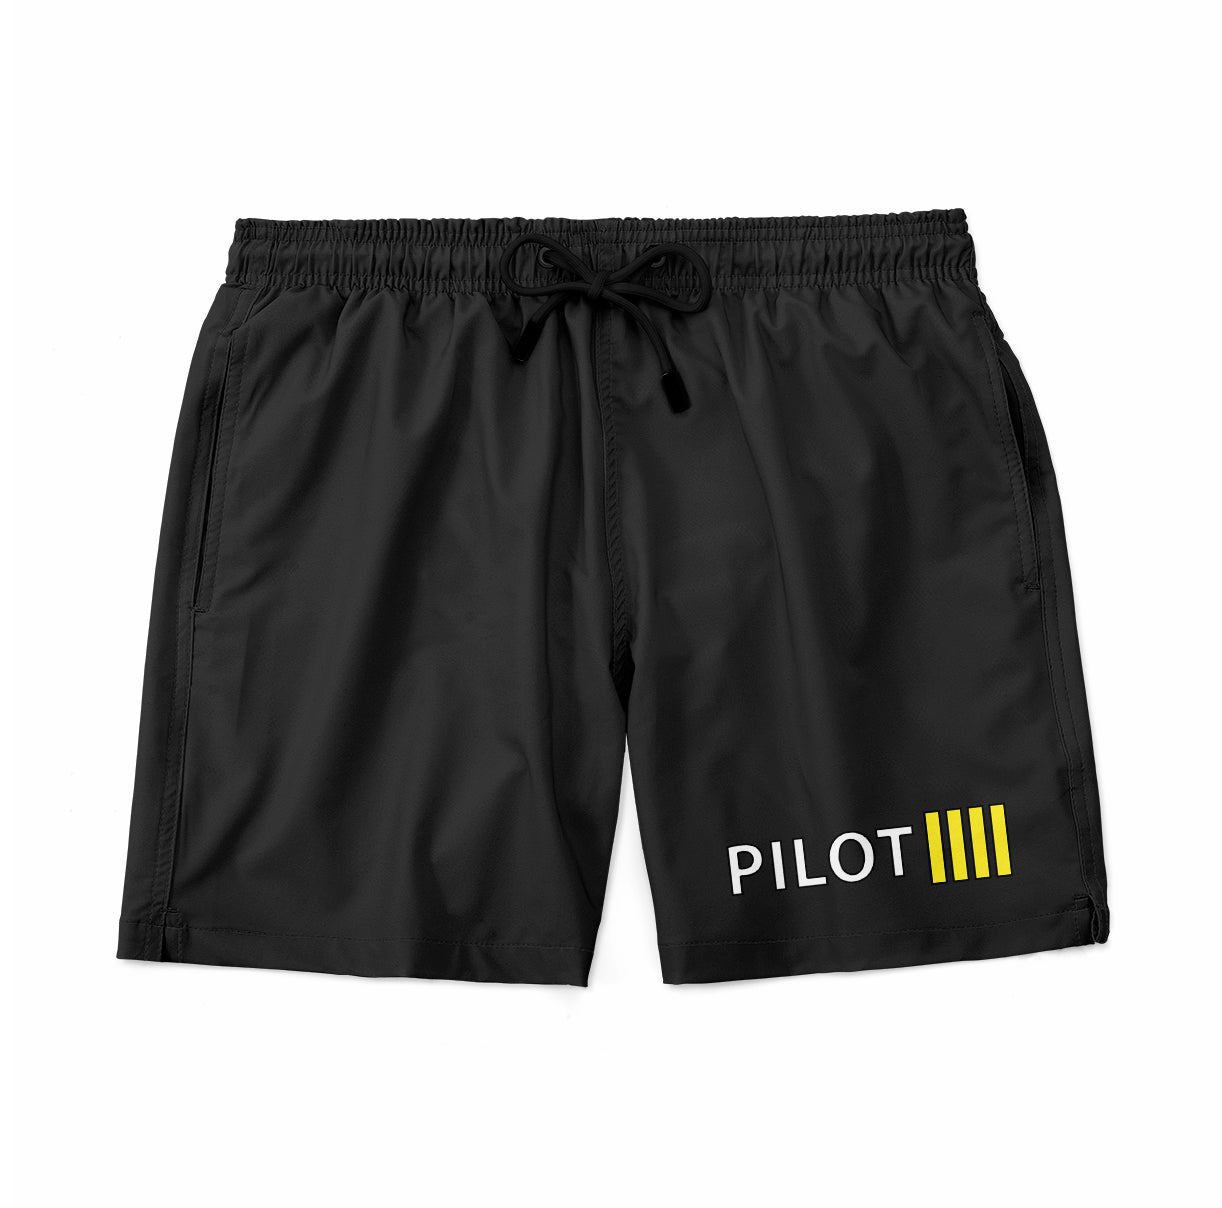 Pilot & Stripes (4 Lines) Designed Swim Trunks & Shorts